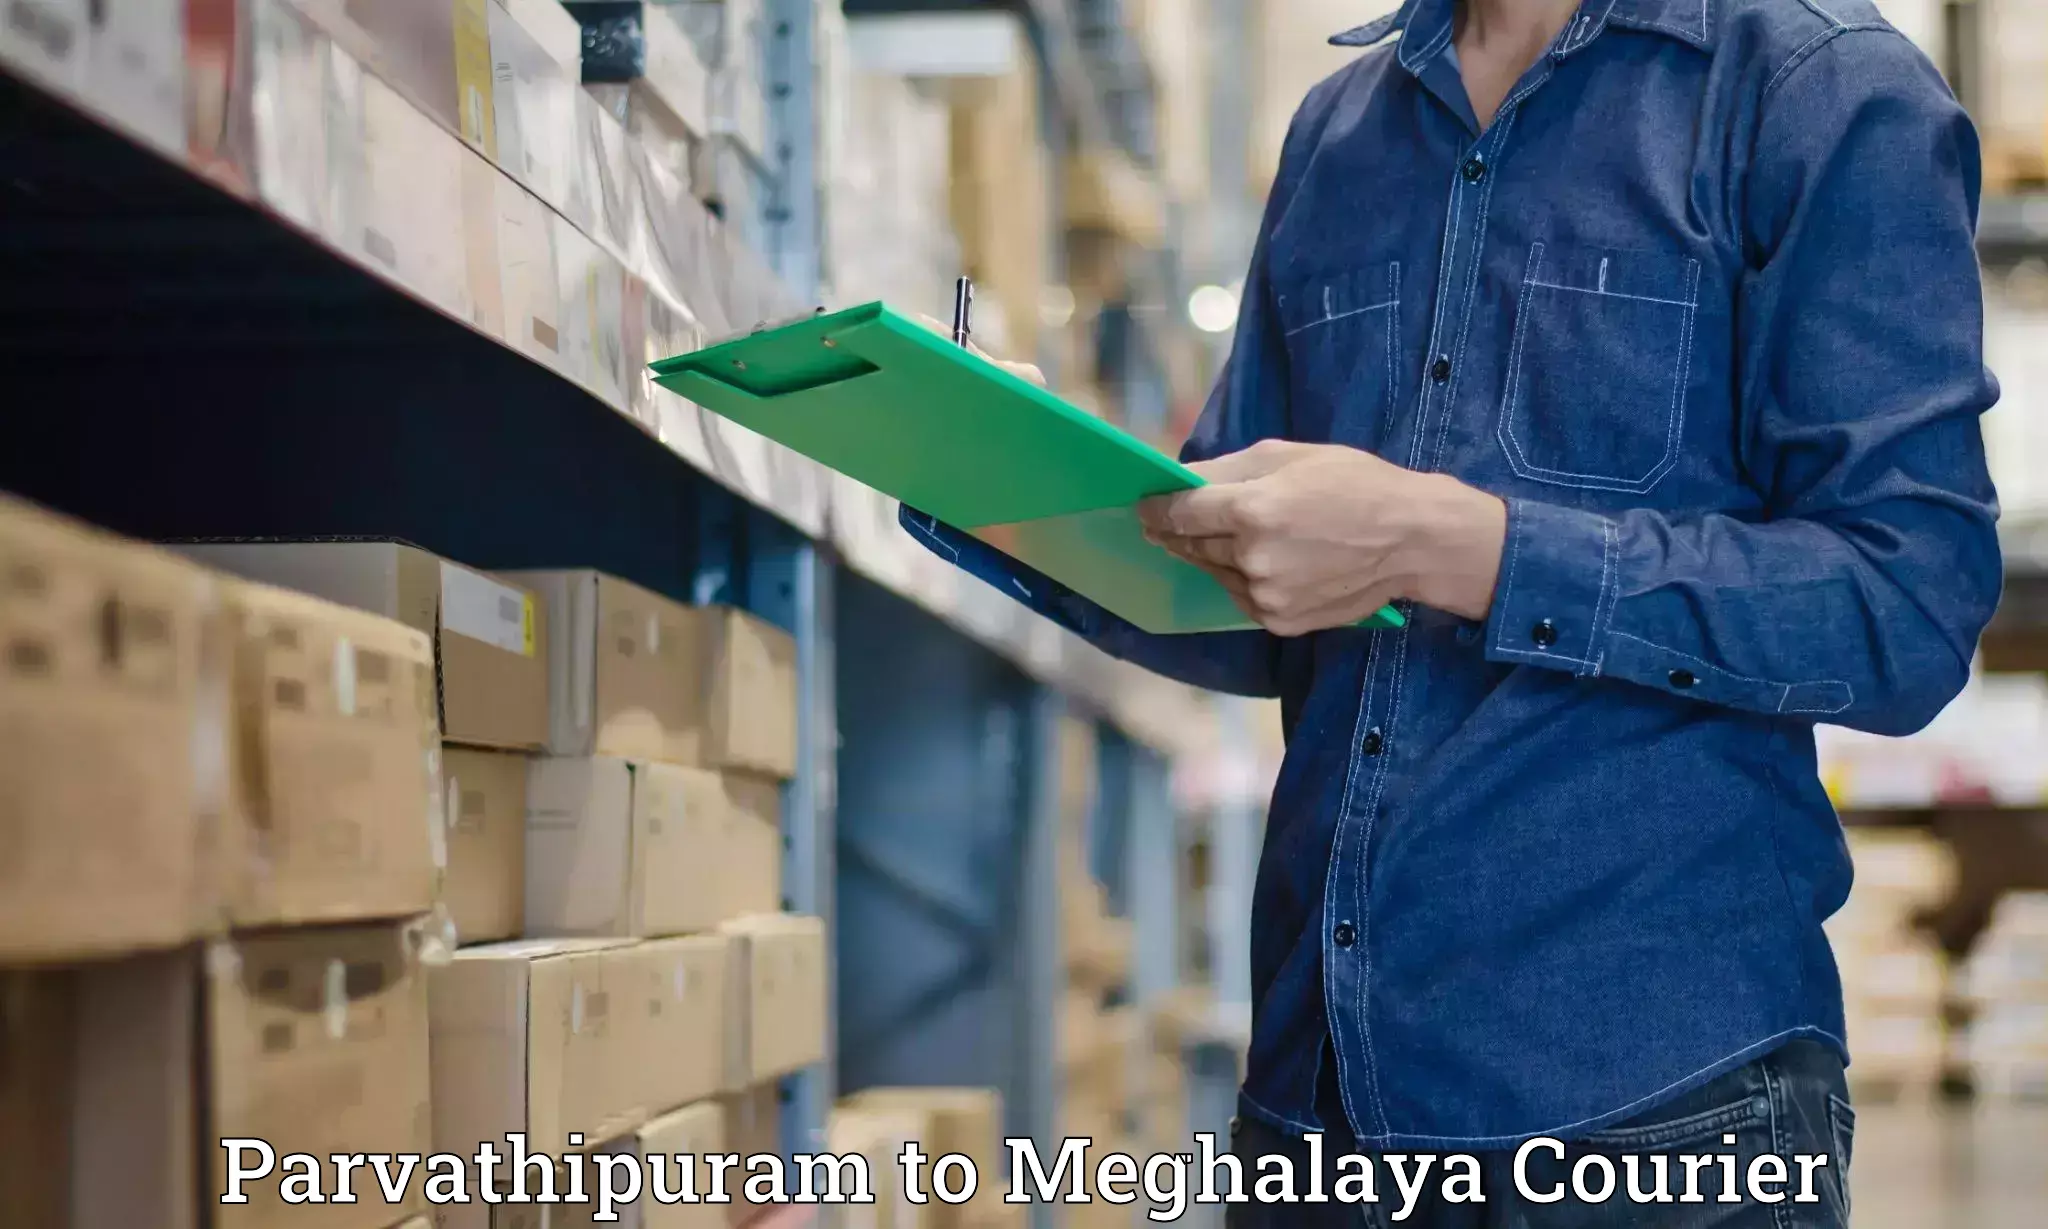 Efficient order fulfillment Parvathipuram to Meghalaya